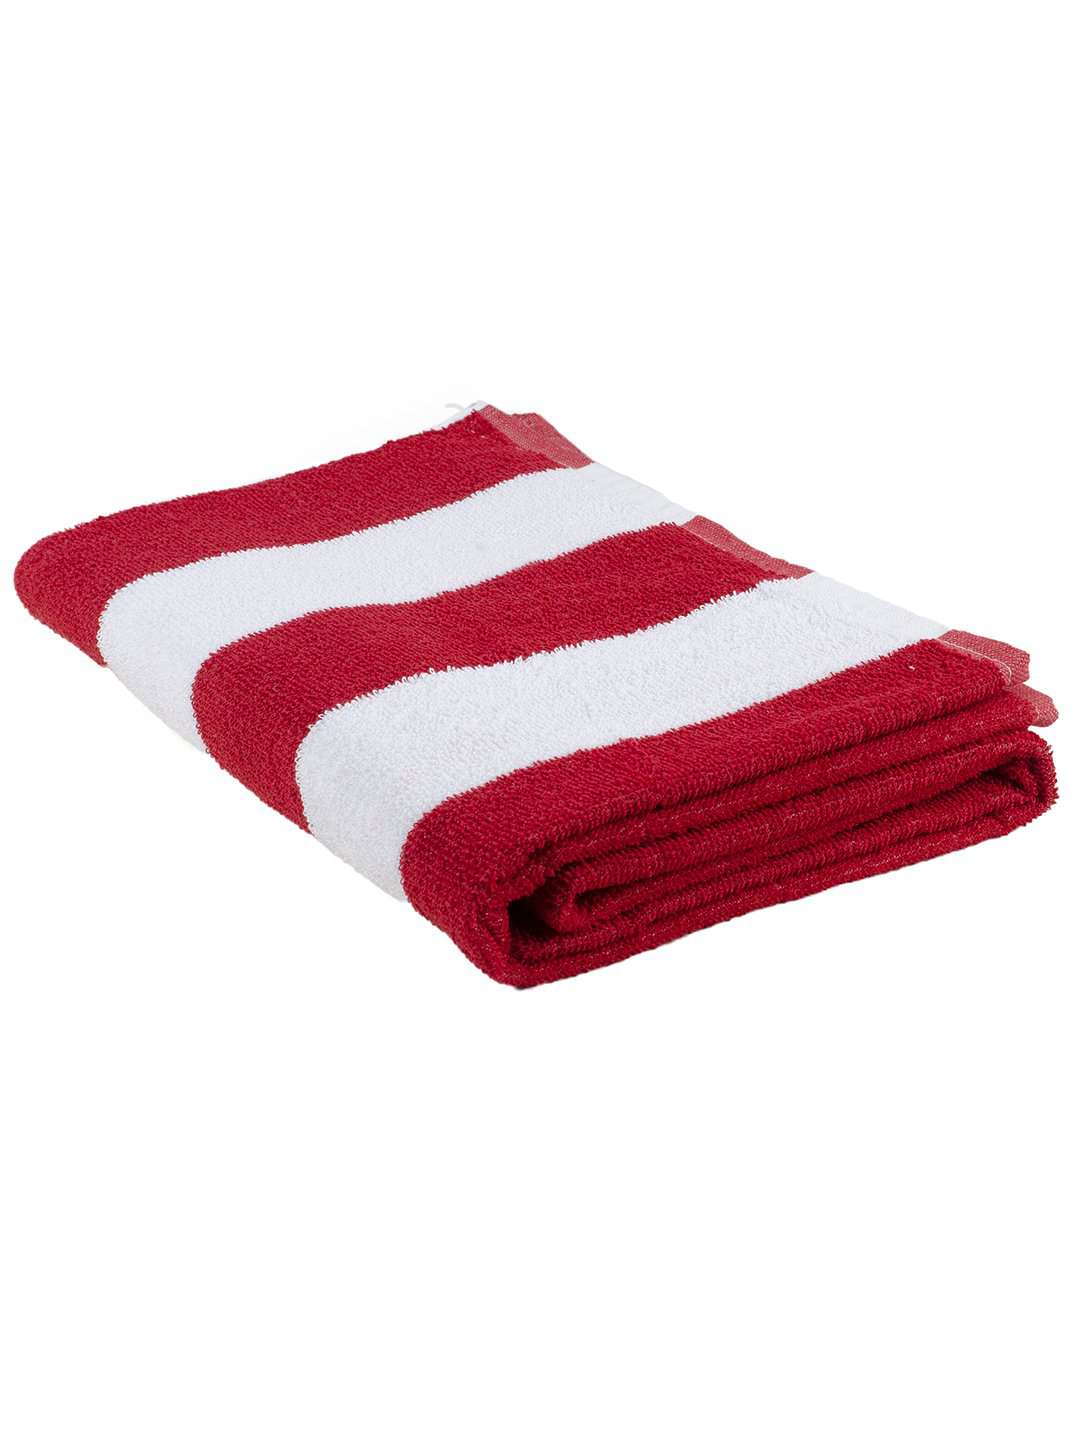 Turkish Bath Premium Cotton Stripe Bath and Pool Towel : Red - SWHF